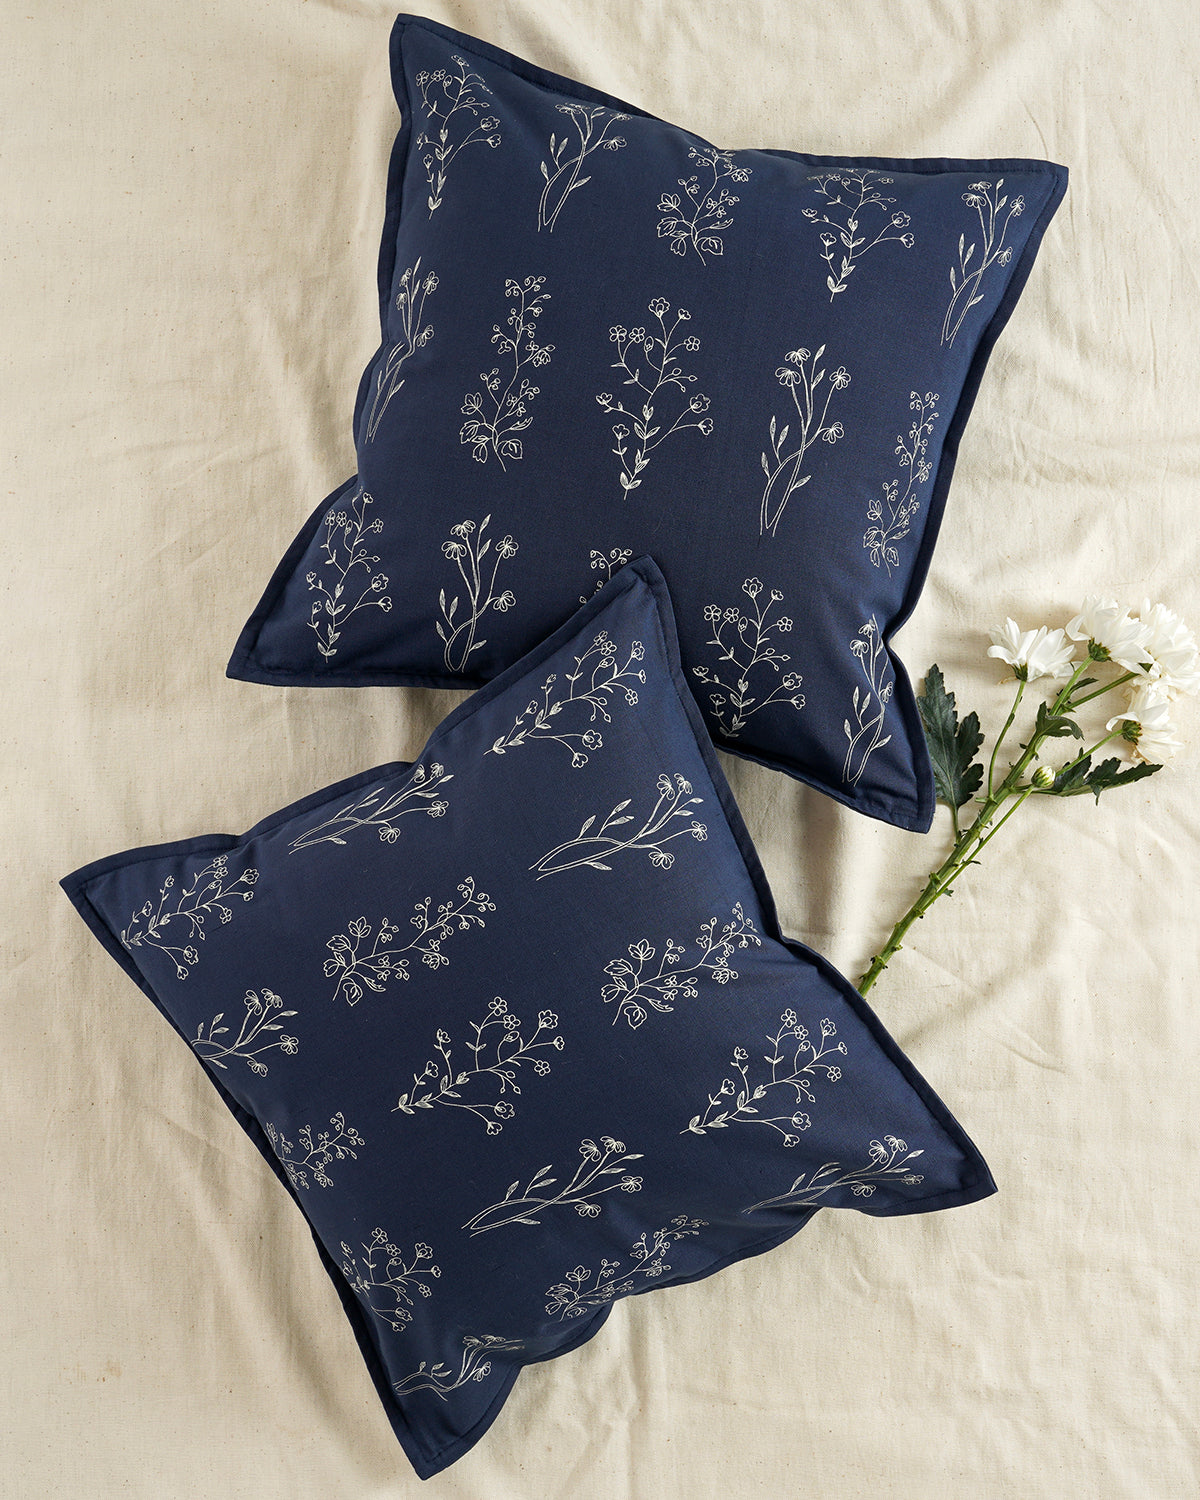 English Meadow Cushion Cover, Navy Blue (18” X 18”)